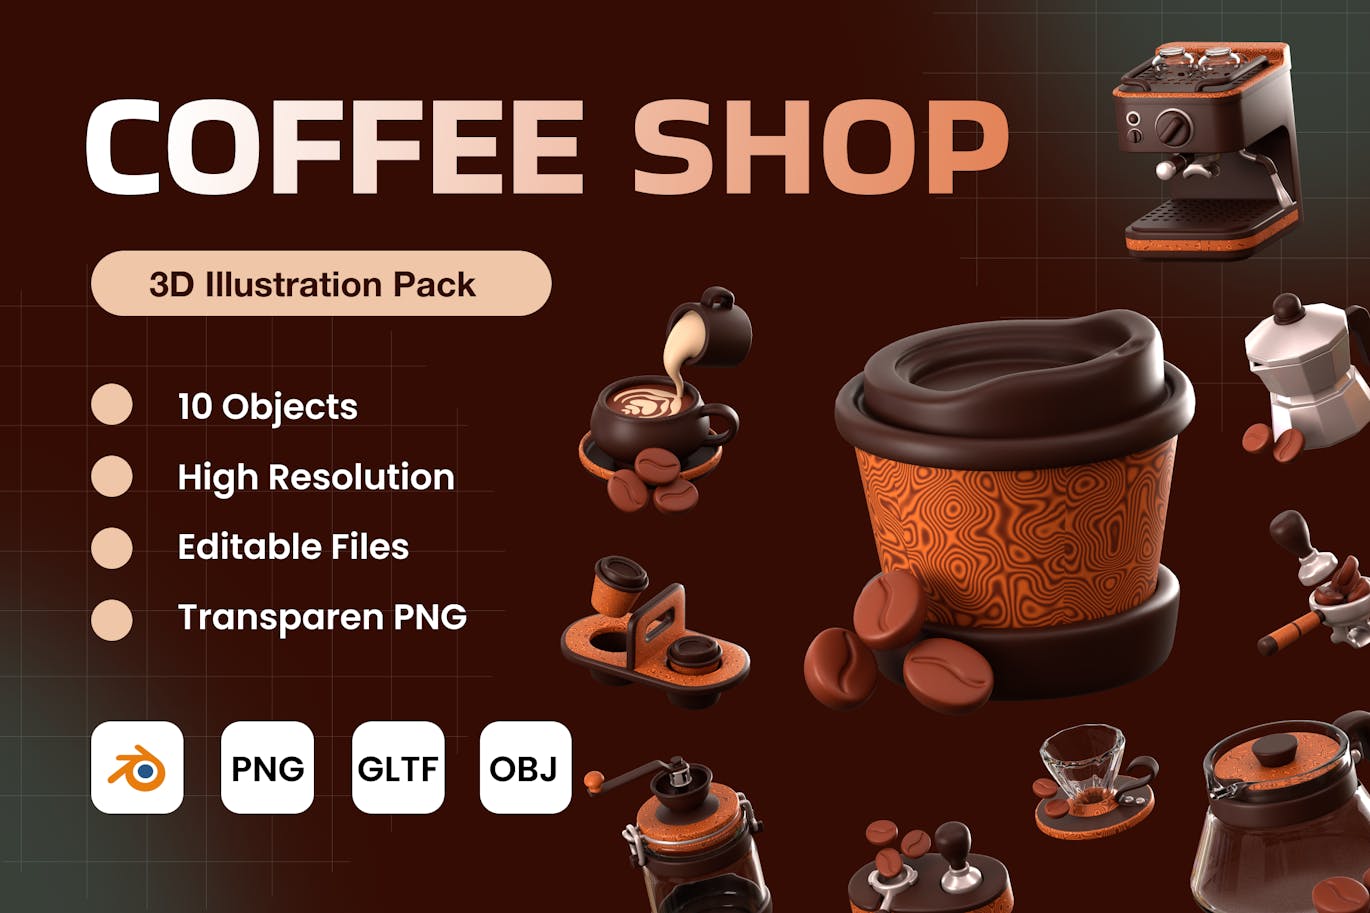 咖啡店 3D 图标包 V.2 (PNG,Blend,OBJ,GLTF)